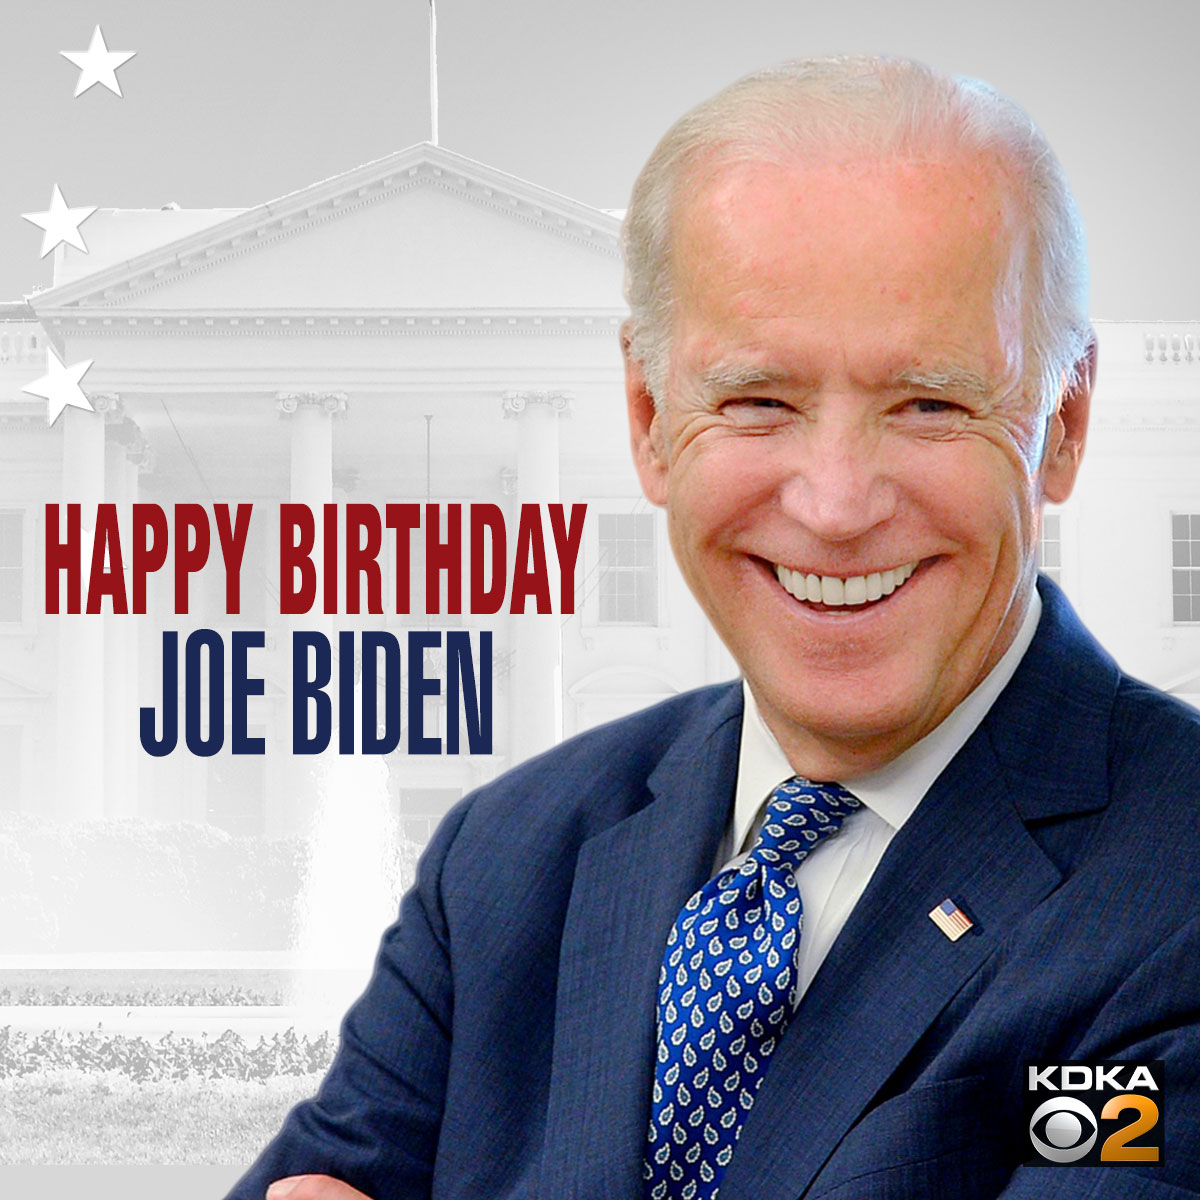 KDKA on X: " Happy Birthday president-elect Biden! He turns 78 years old today. https://t.co/BwncFNyoyE" / X